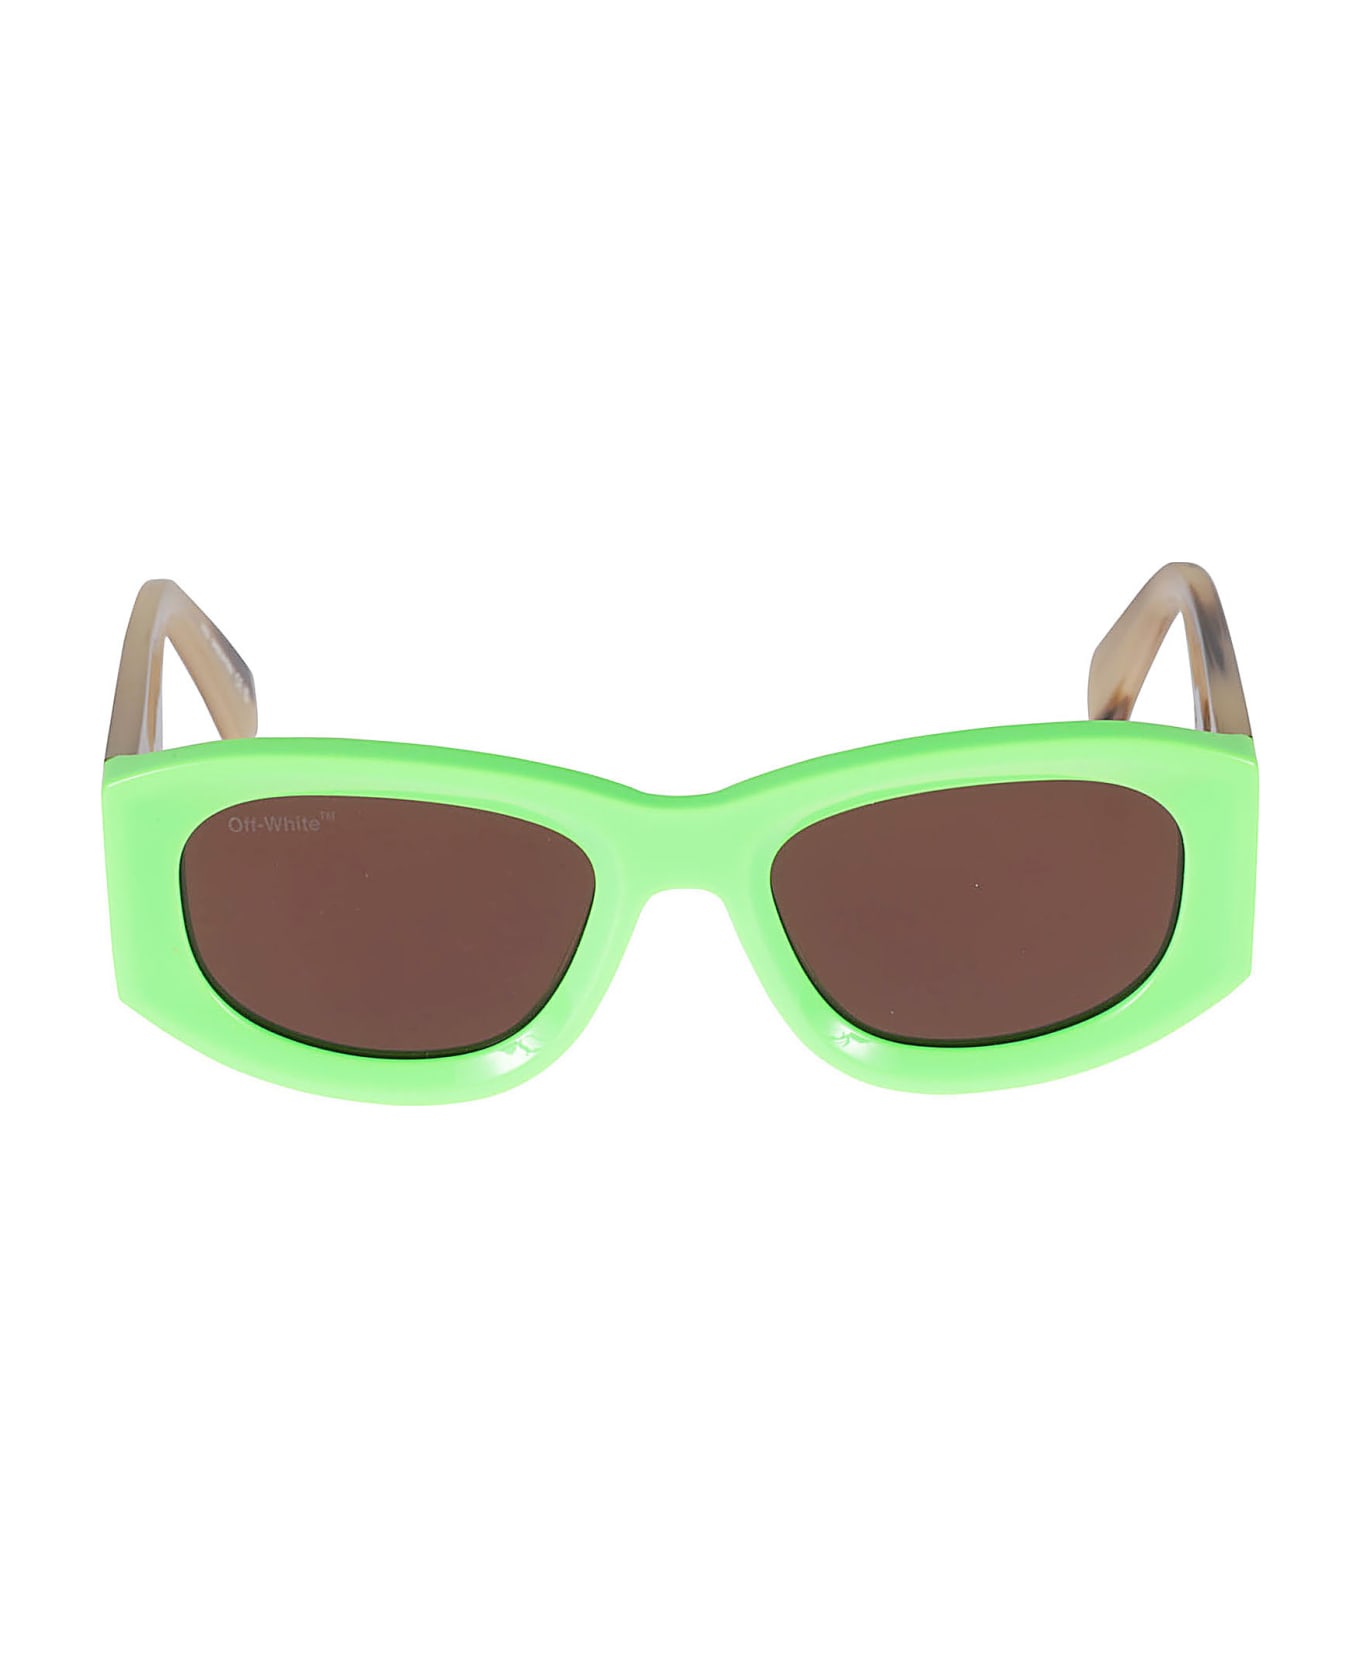 Off-White Joan Sunglasses - Green